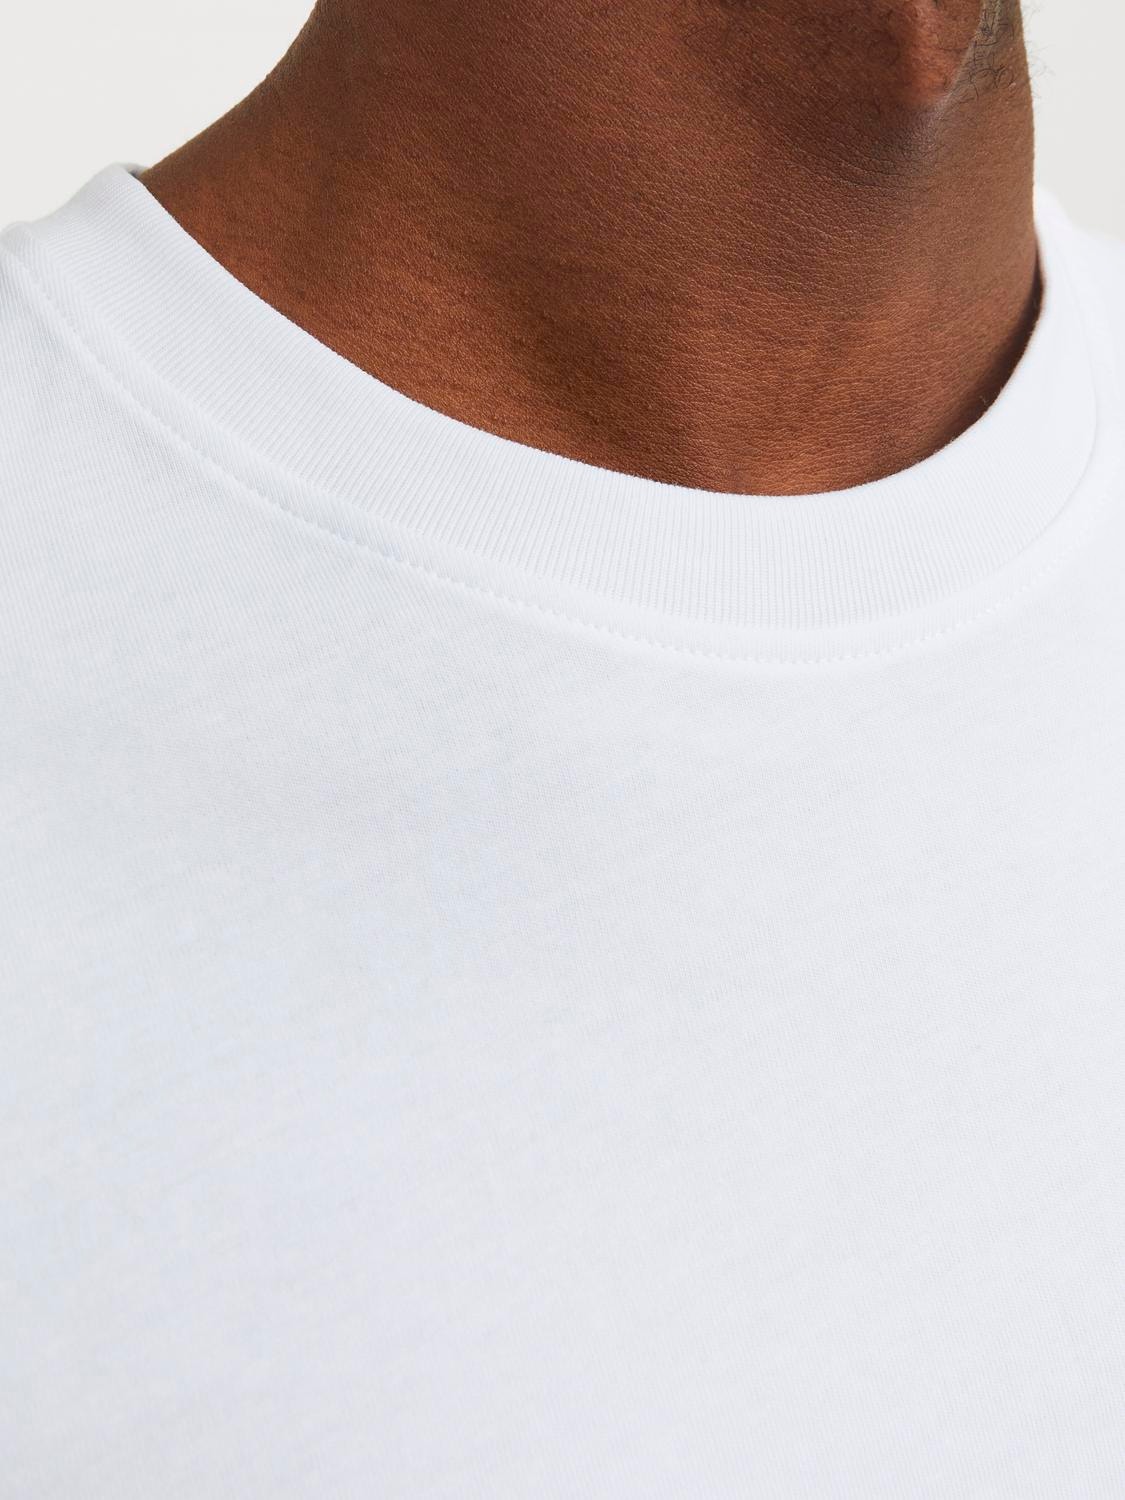 Jack & Jones Plain Crew neck T-shirt -White - 12251615